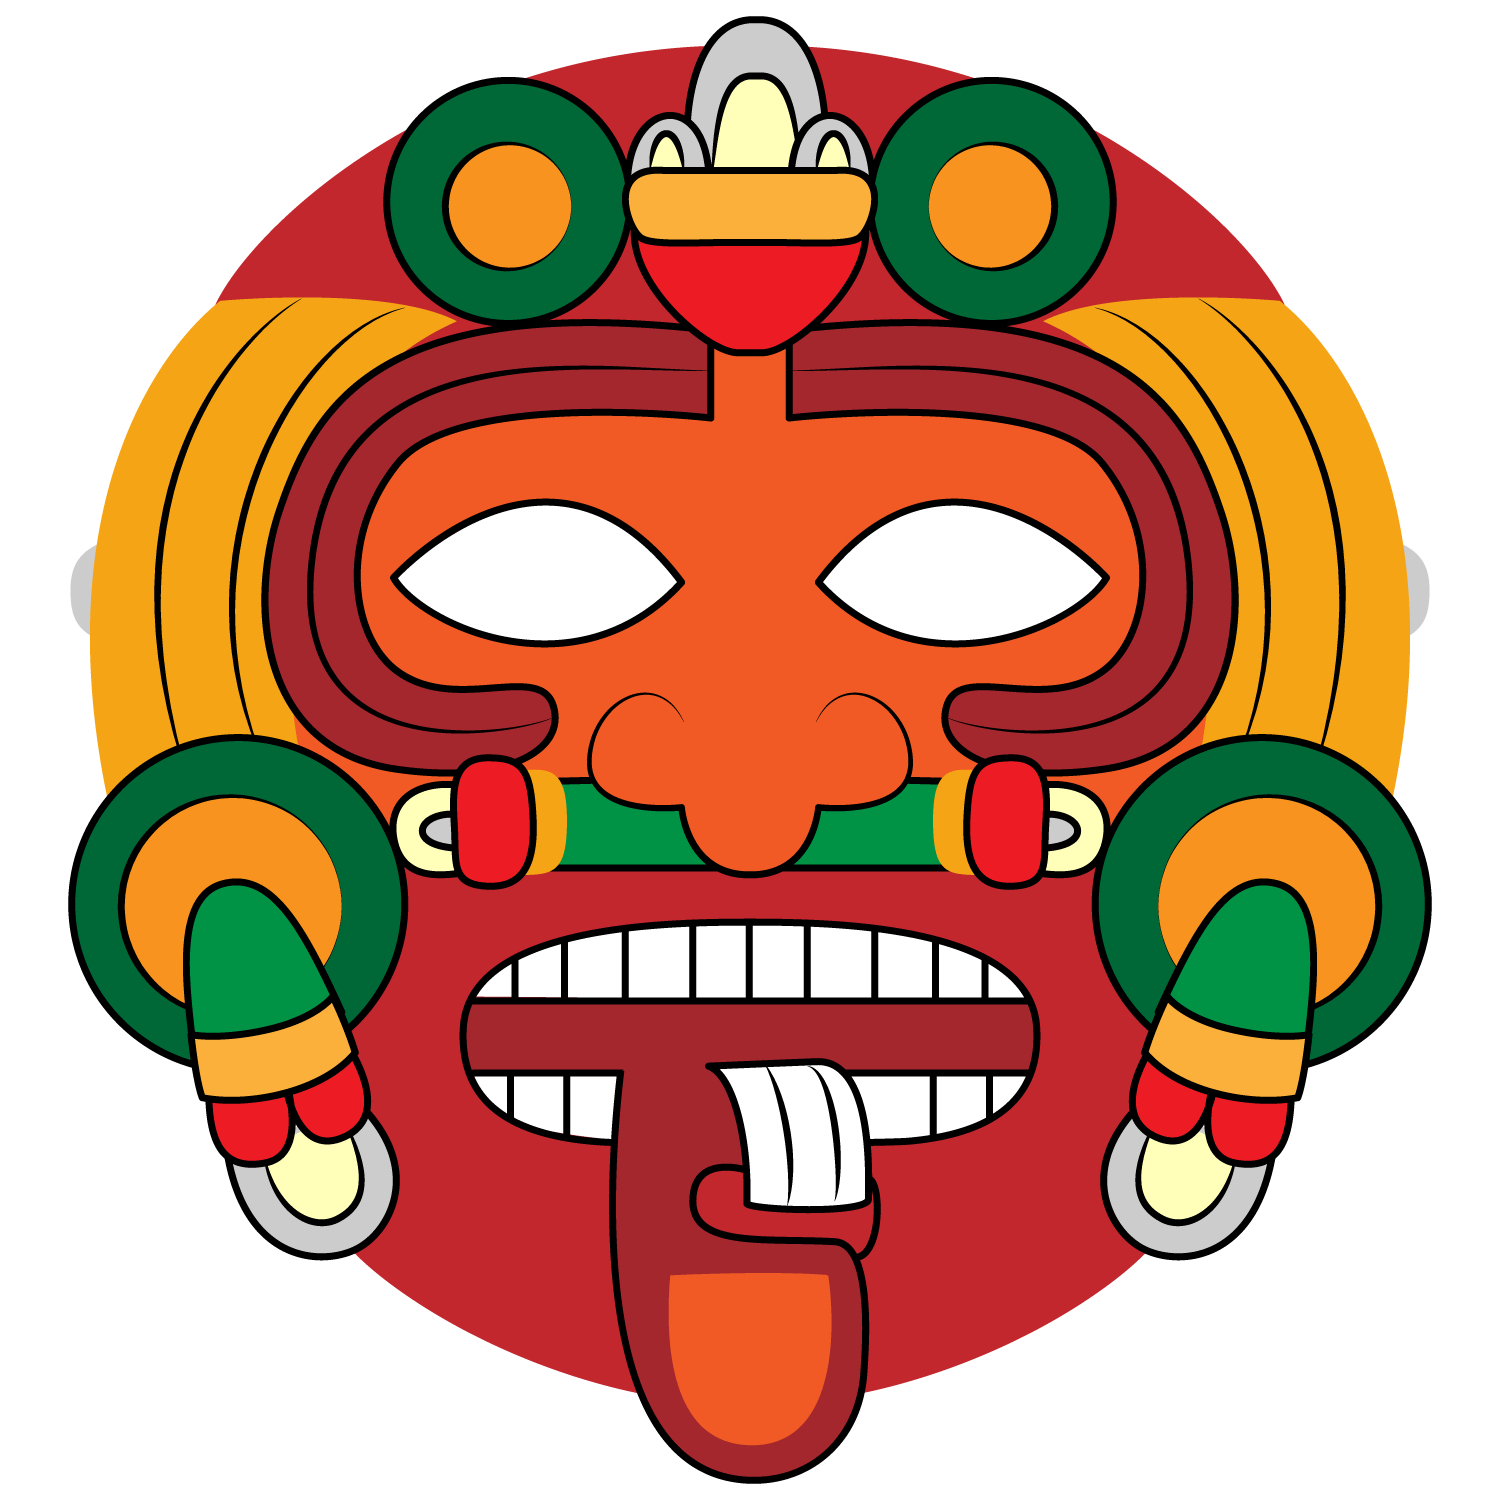 Aztec Mask Template | Free Printable Papercraft Templates intended for Aztec Mask Template